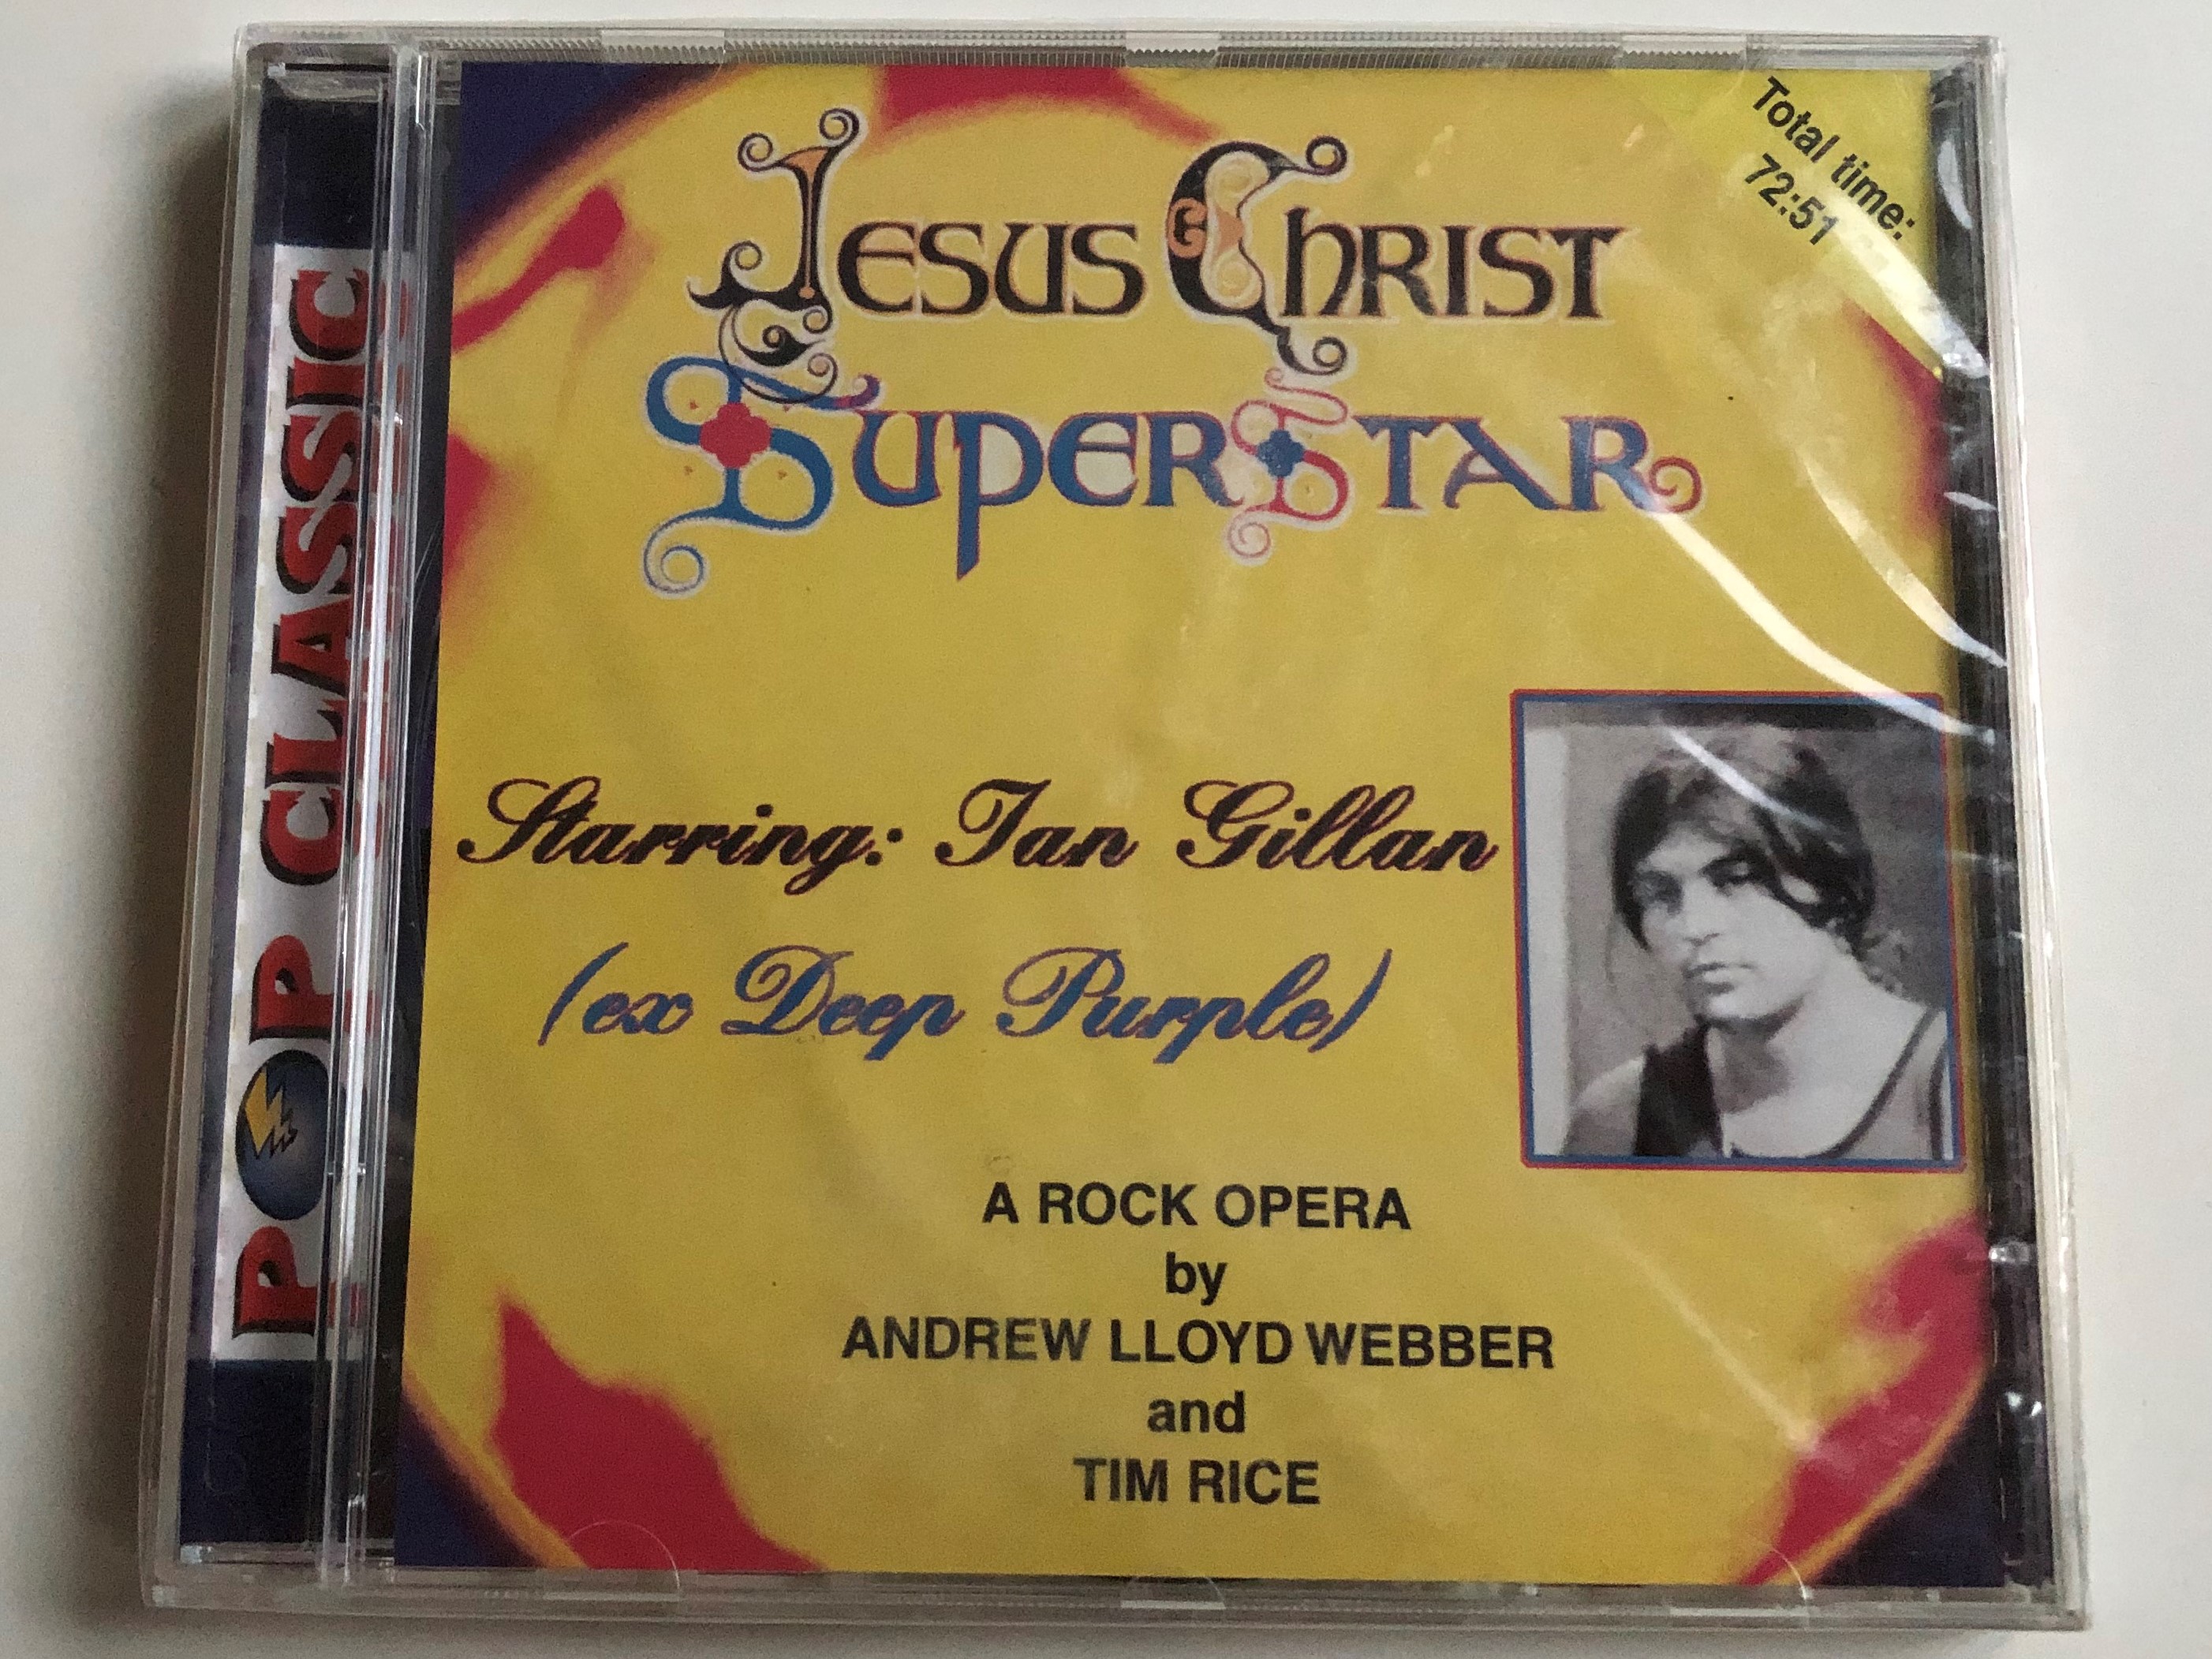 jesus-christ-superstar-starring-ian-gillan-ex-deep-purple-a-rock-opera-by-andrew-lloyd-webber-and-tim-rice-pop-classic-euroton-audio-cd-eucd-0023-1-.jpg